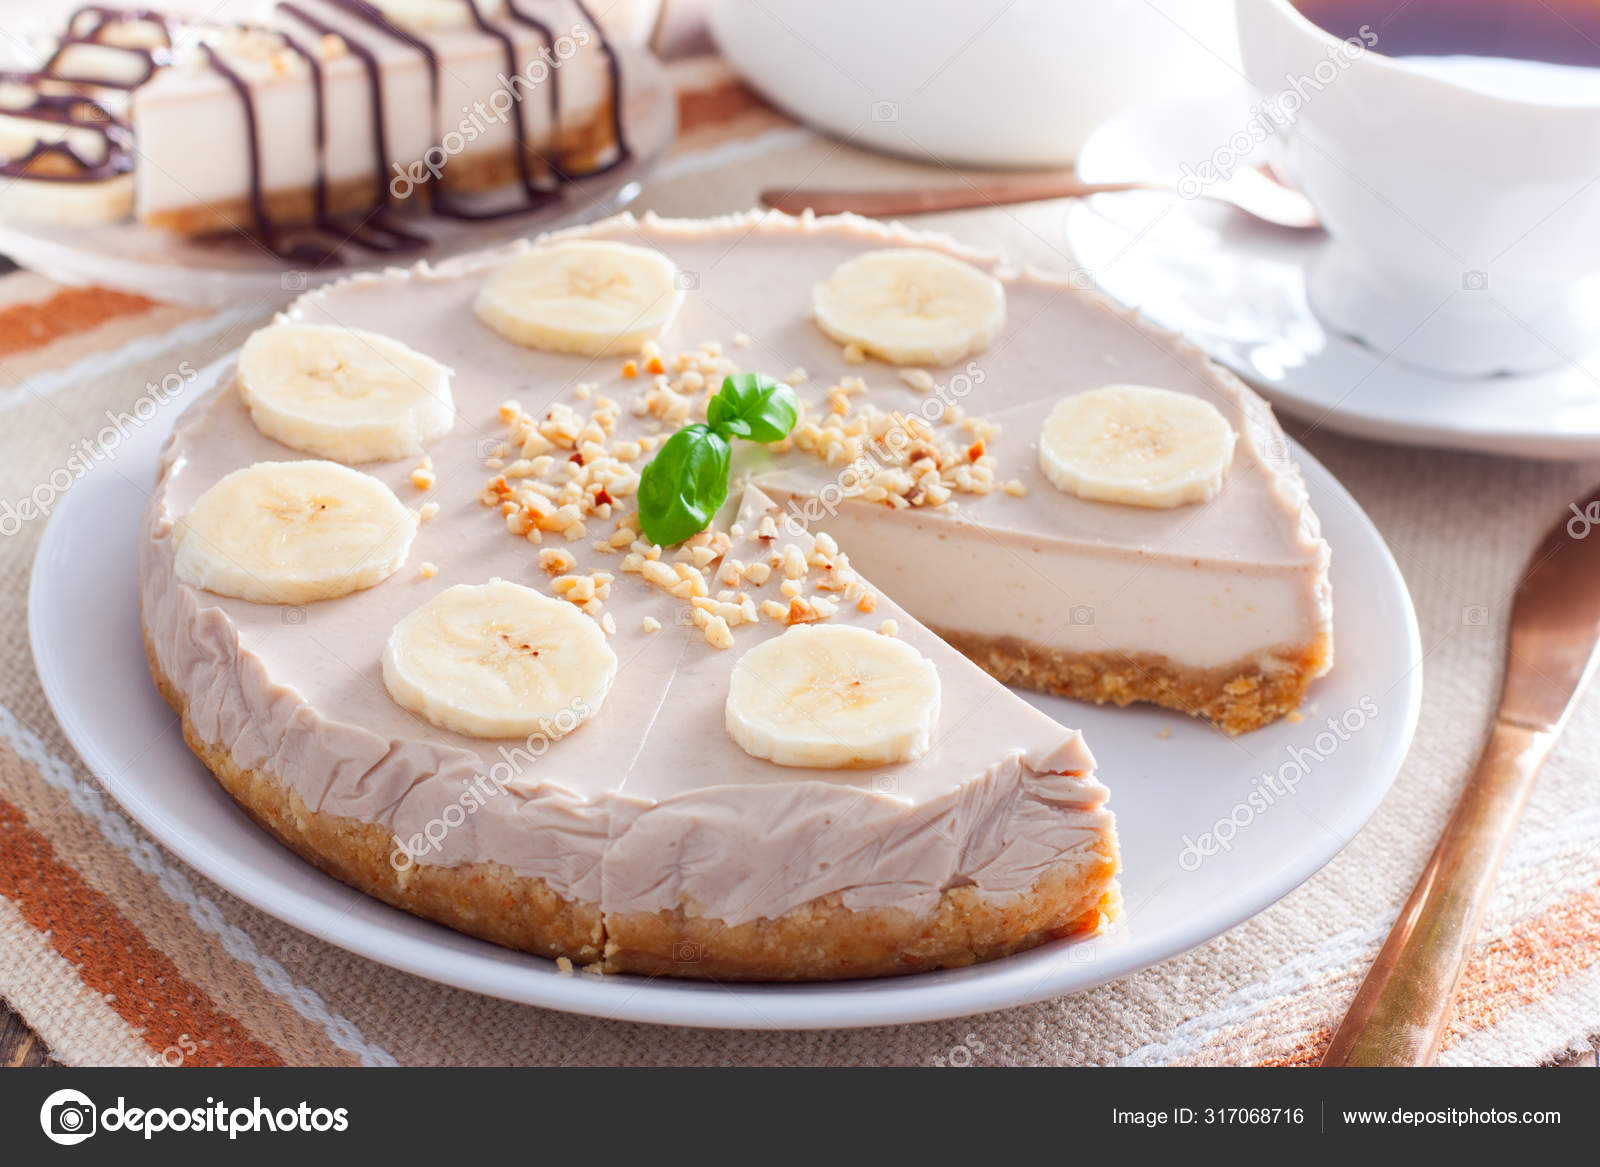 Рецепт бананового чизкейка. Торт банановый чизкейк. Банановый чизкейк с творогом без выпечки. Торт банановый чизкейк без выпечки. Яблочно-банановый чизкейк.